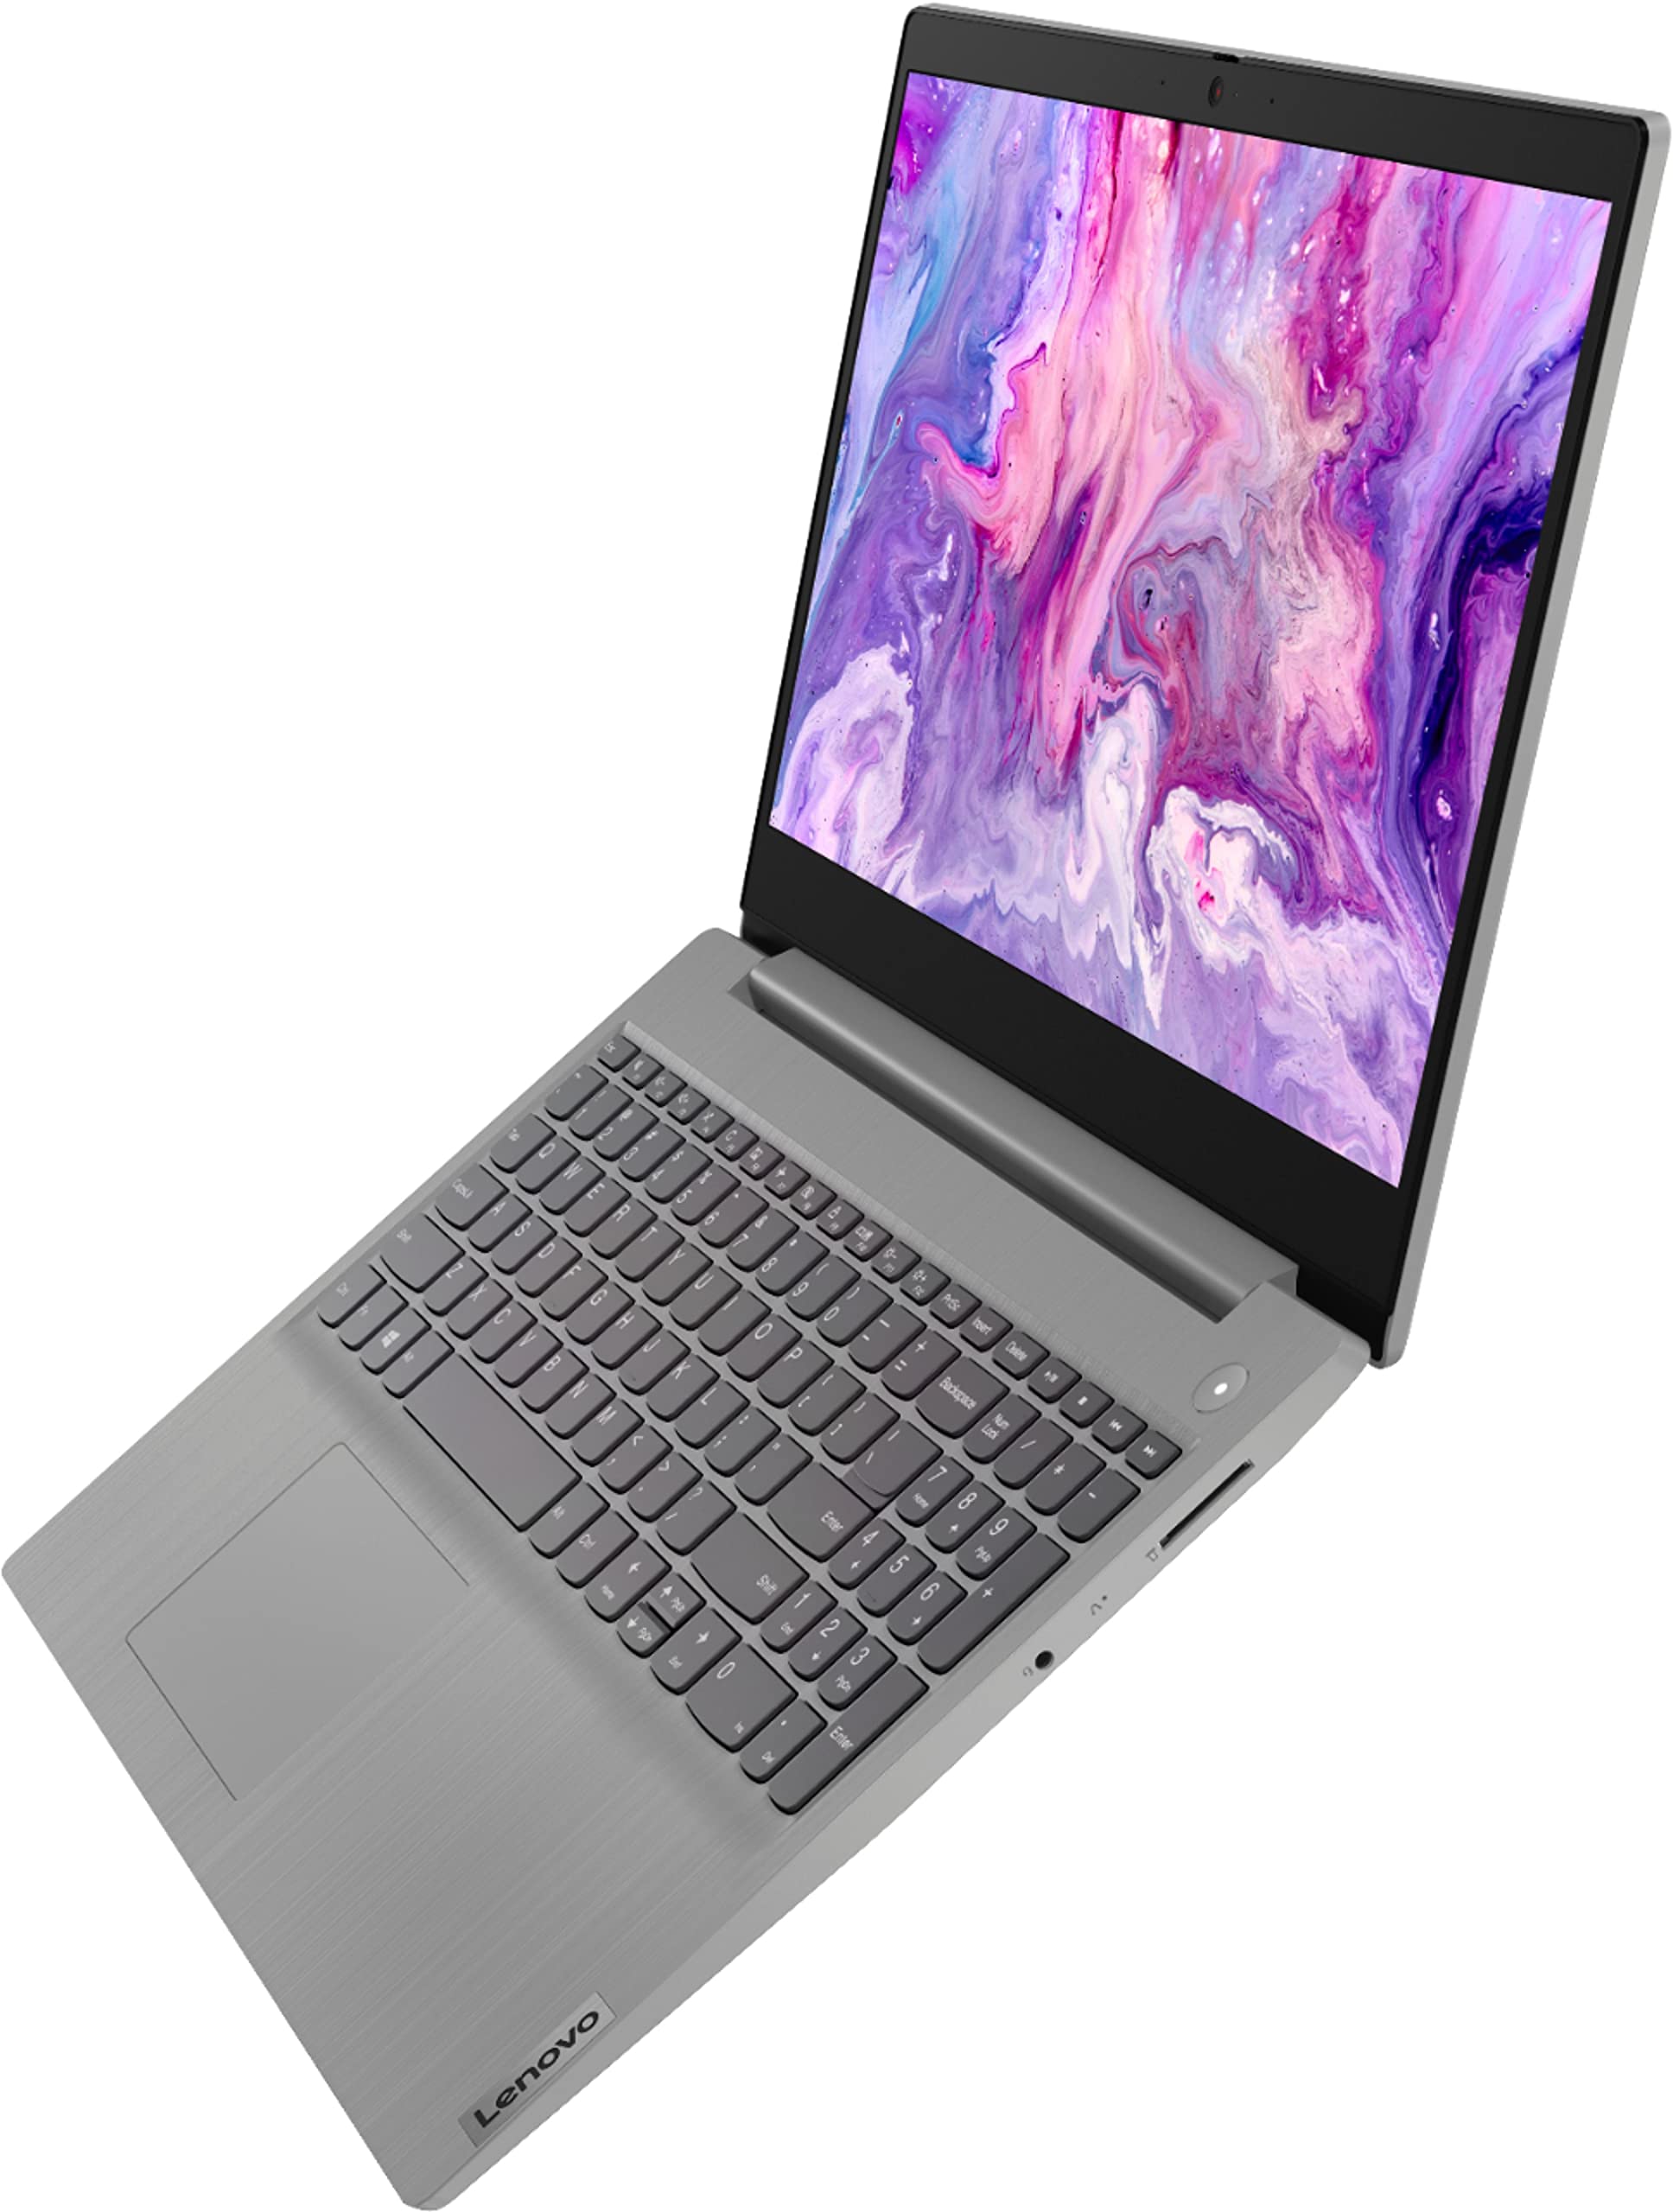 Lenovo 2022 15 Touchscreen Business Laptop, 15.6" Full HD Touch Screen, Intel Quad-Core i5 11th Gen i5-1135G7, 12GB RAM, 256GB SSD Storage, WiFi 6, Backlit Keyboard, Windows 10 S, YSC Accesory